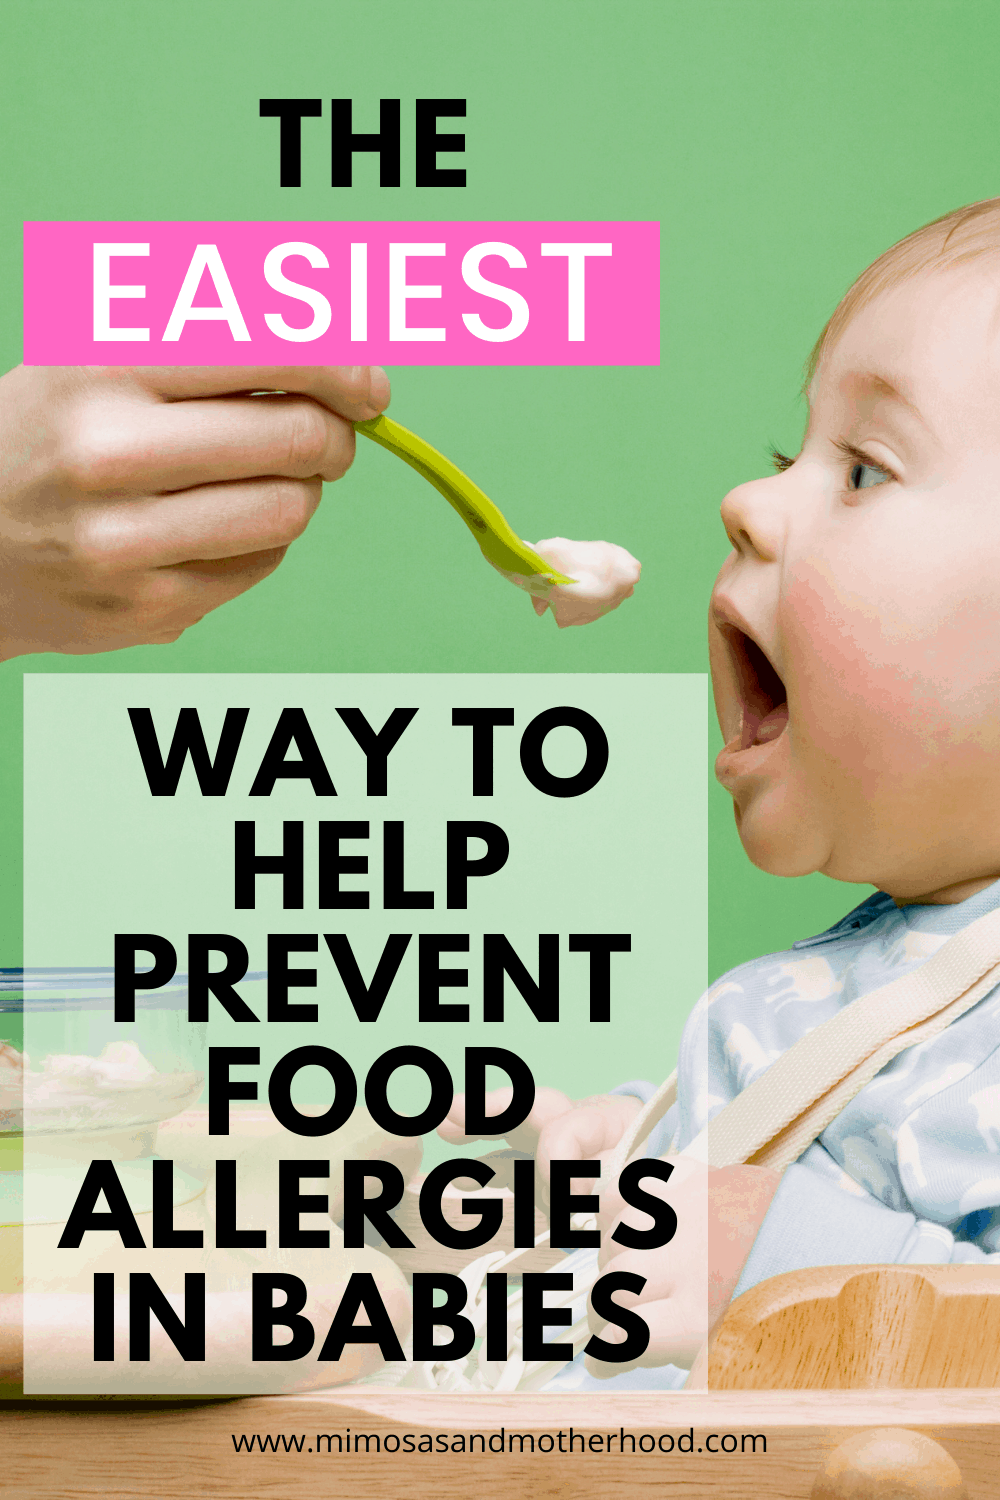 How to Help Prevent Food Allergies in Babies